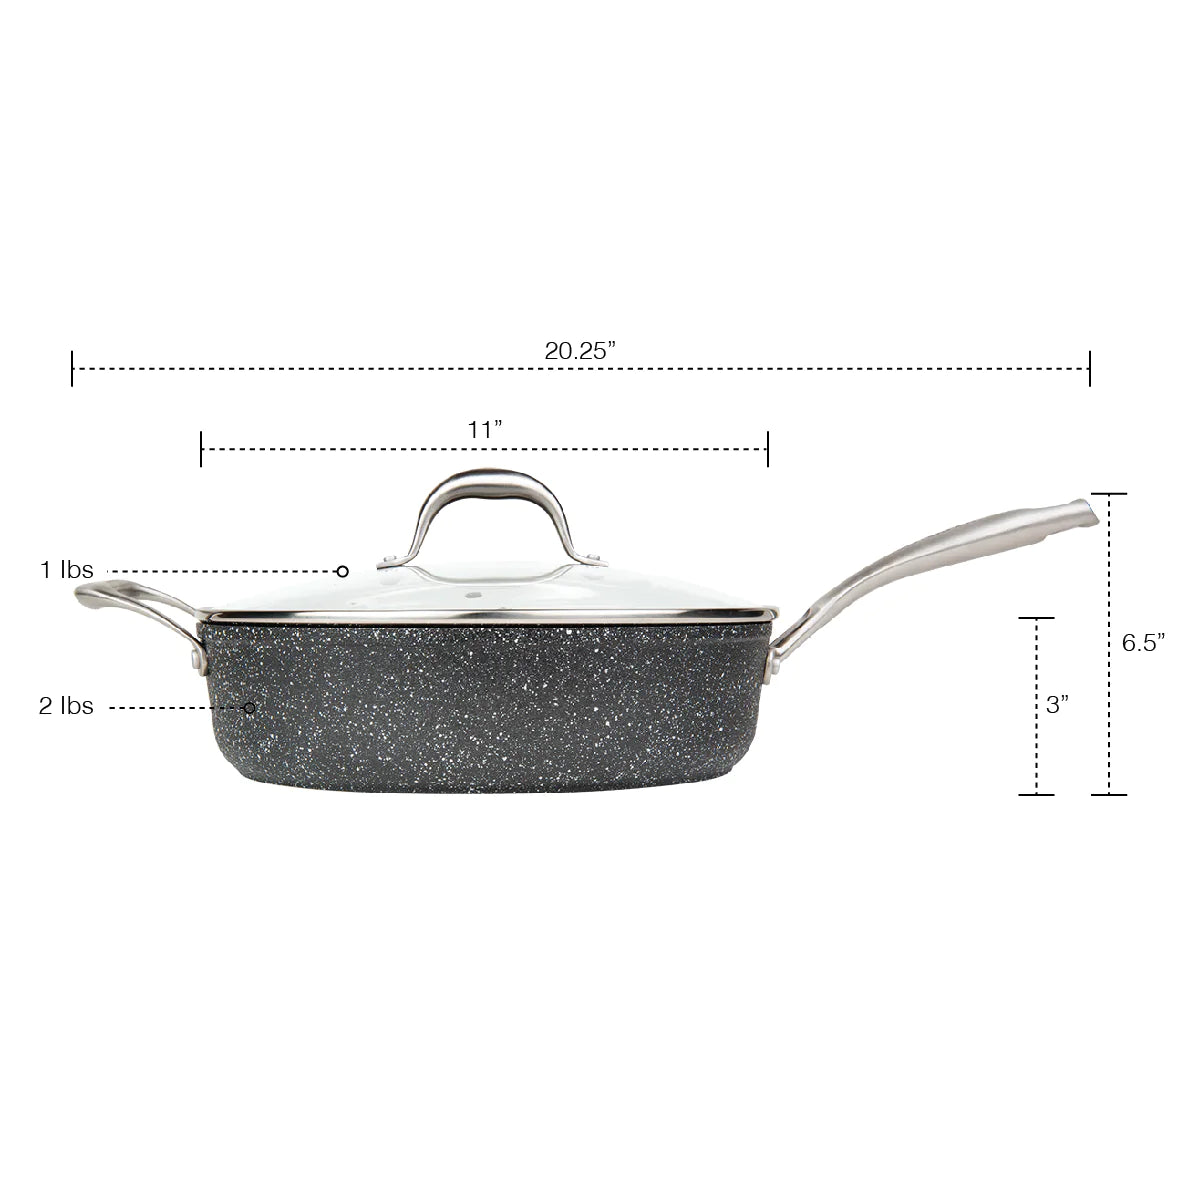 Induction Bottom Aluminum Nonstick Frying-Pan Grey Fry Pan - 11